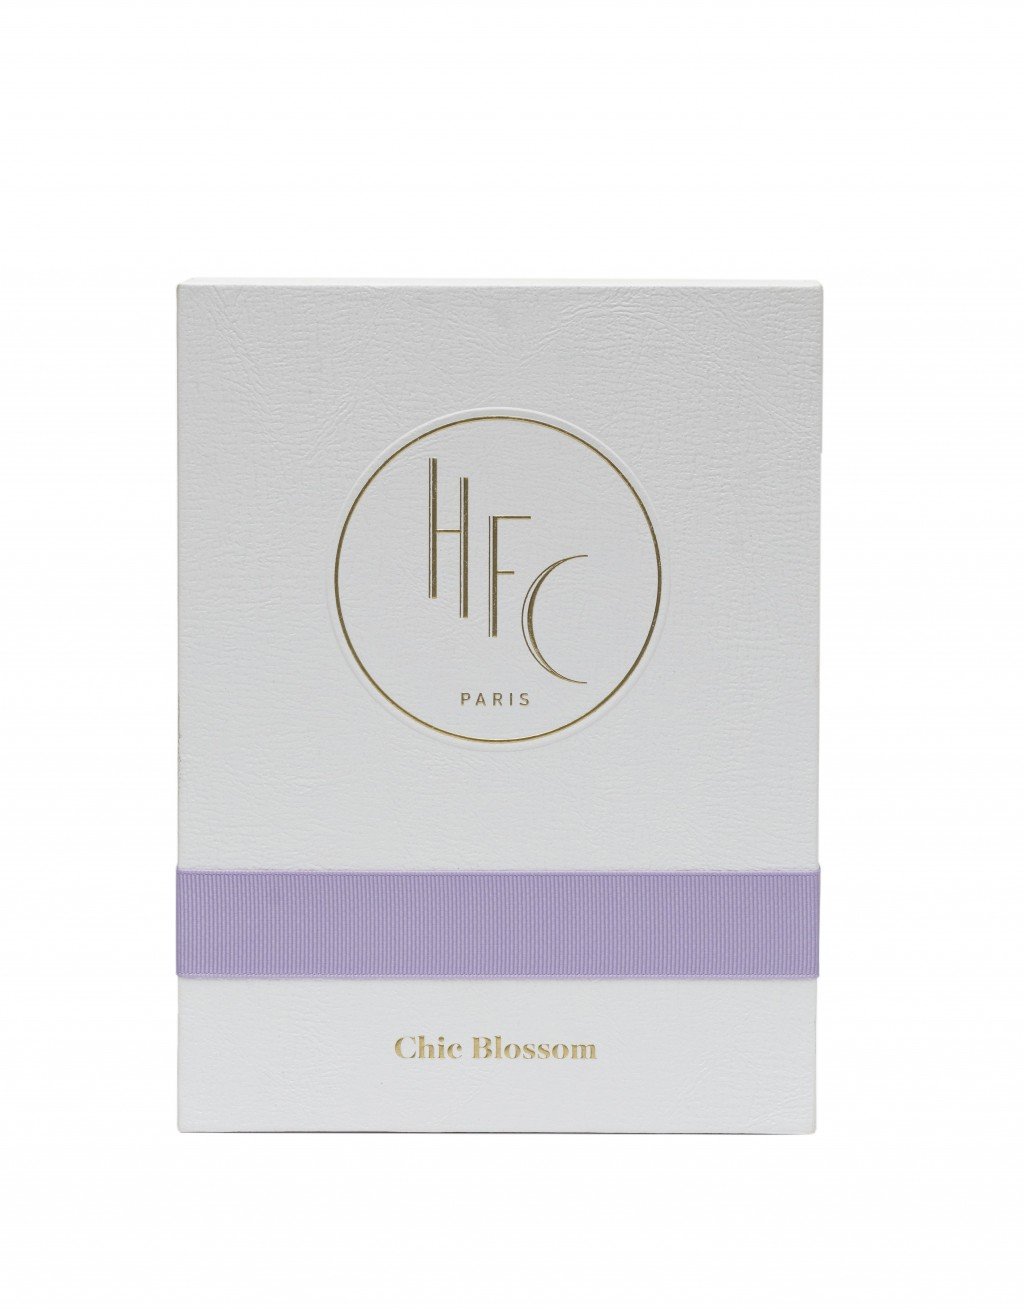 Divine blossom hfc. Haute Fragrance Company Chic Blossom 75 мл. HFC Парфюм Chic Blossom. Chic Blossom Haute Fragrance Company HFC. Haute Fragrance Company Chic Blossom 7.5.